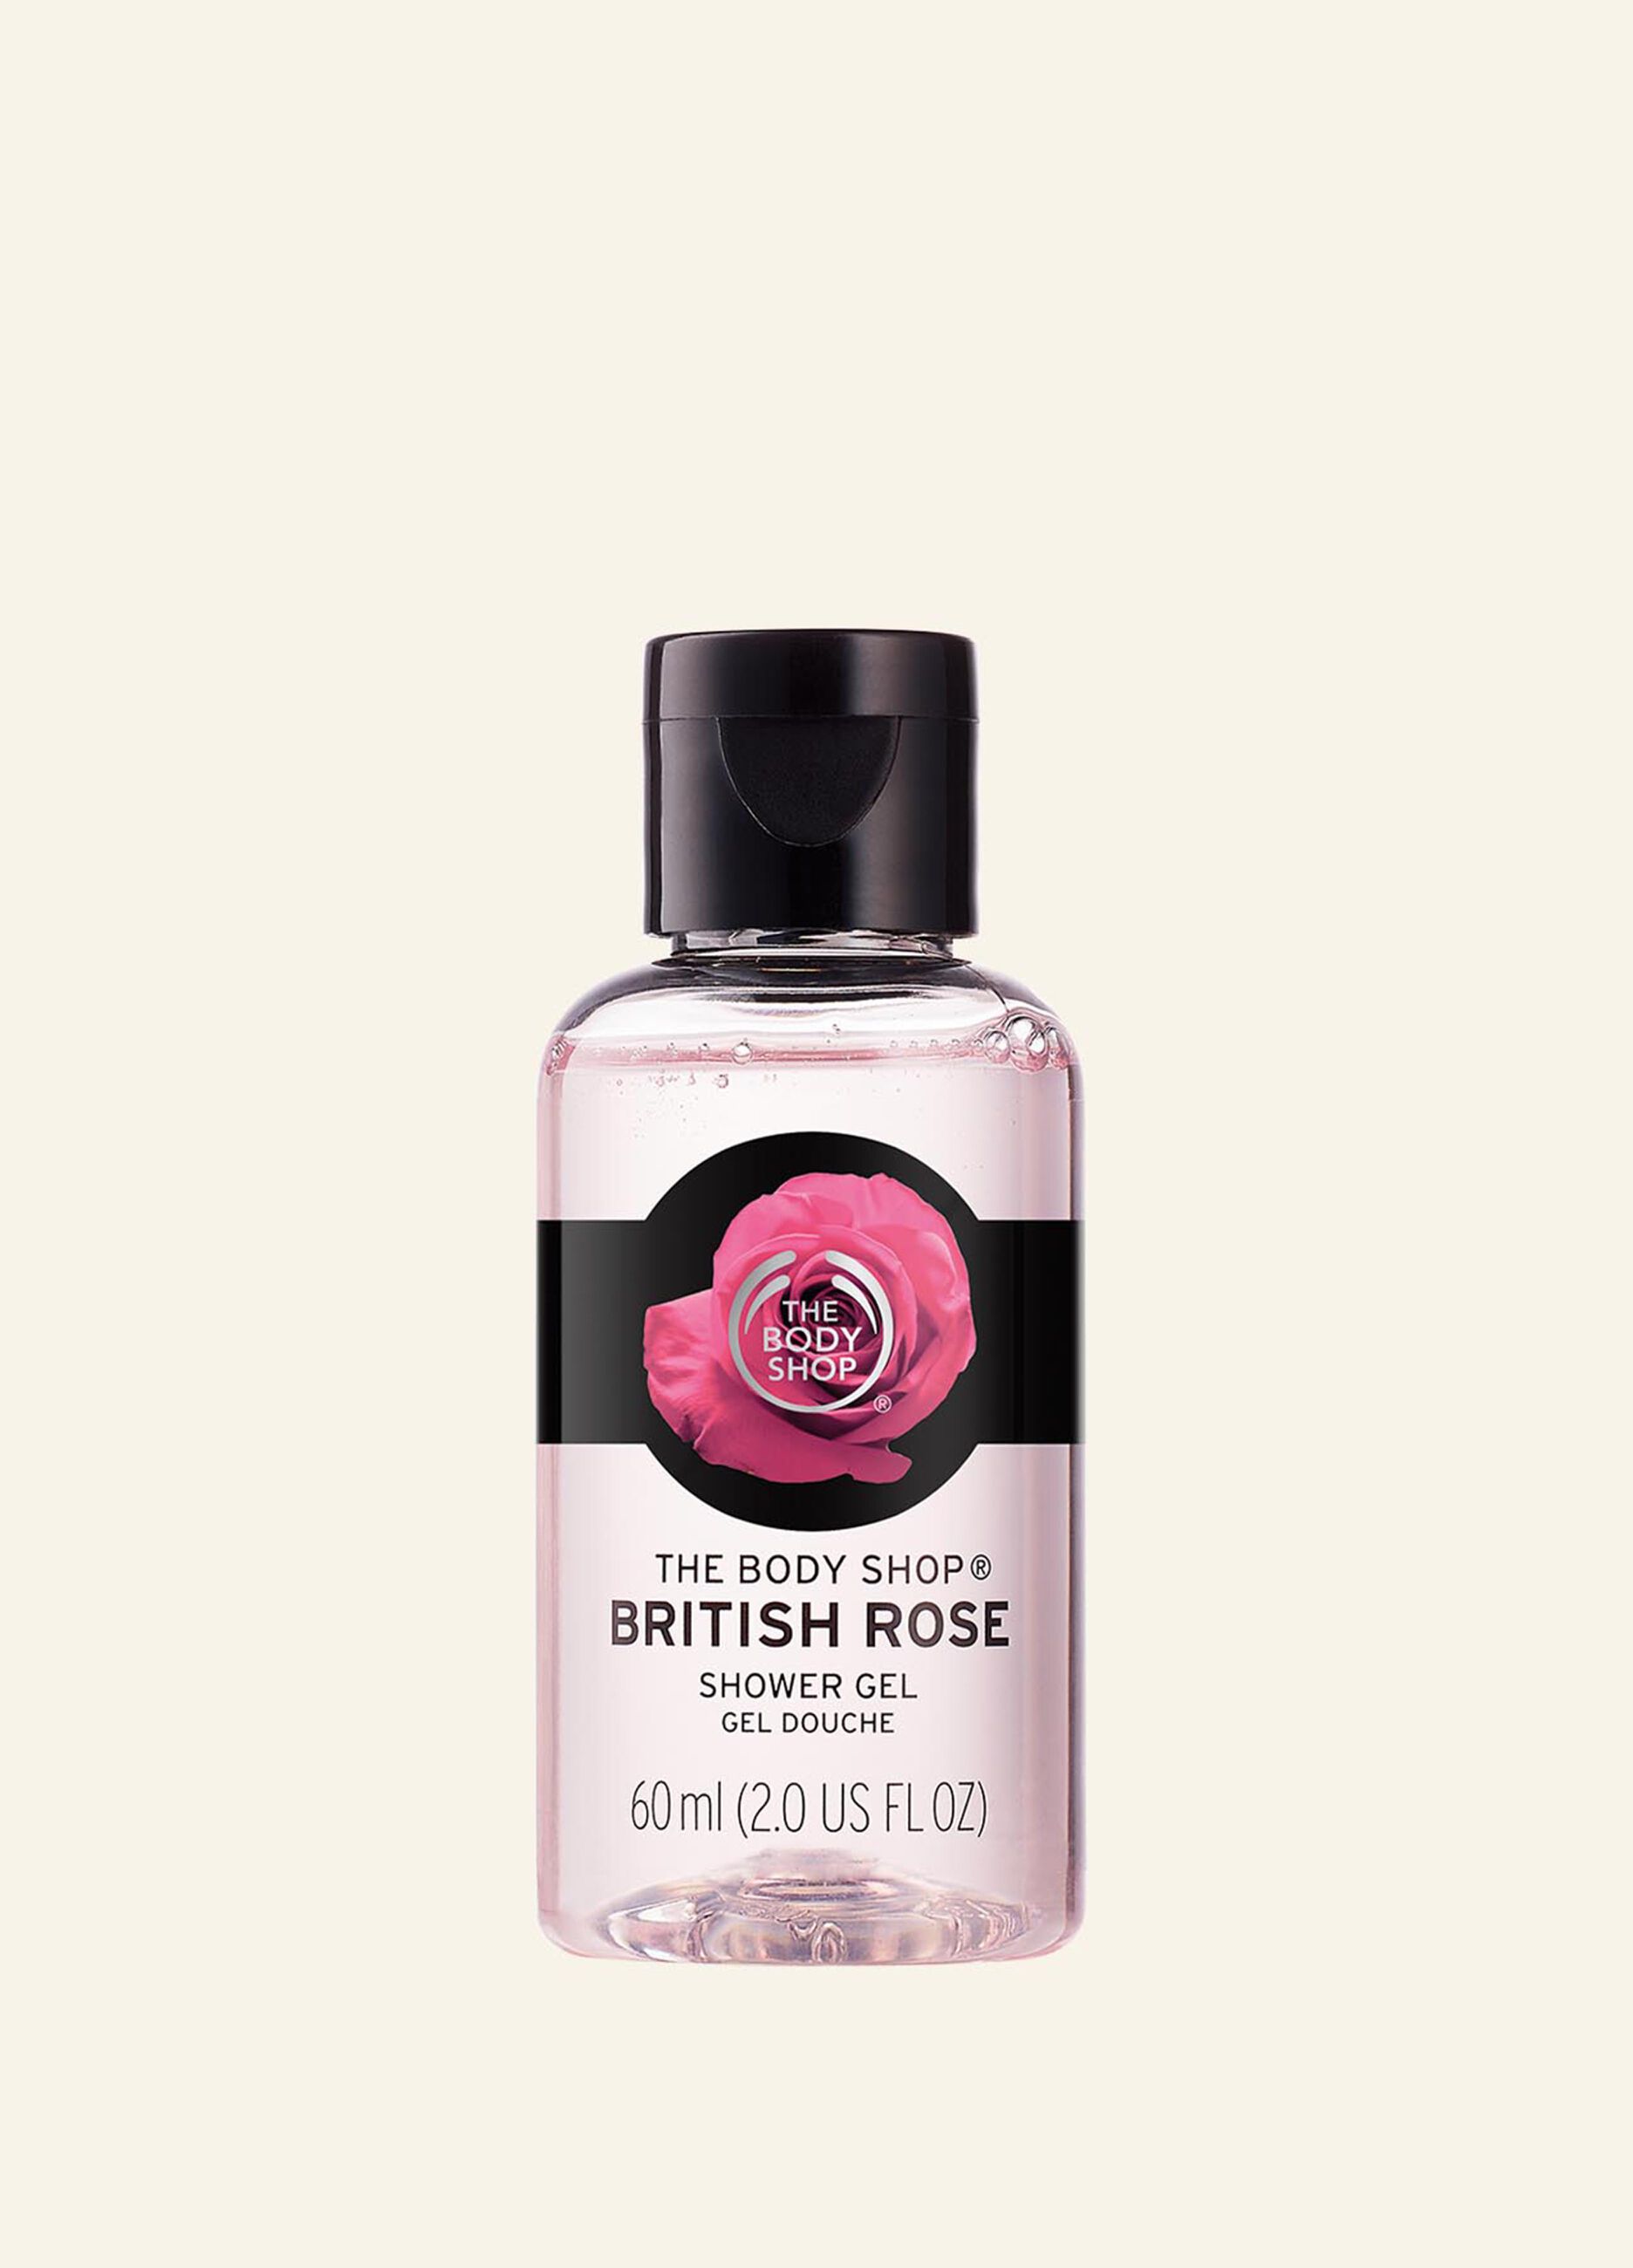 The Body Shop British Rose shower gel 60ml